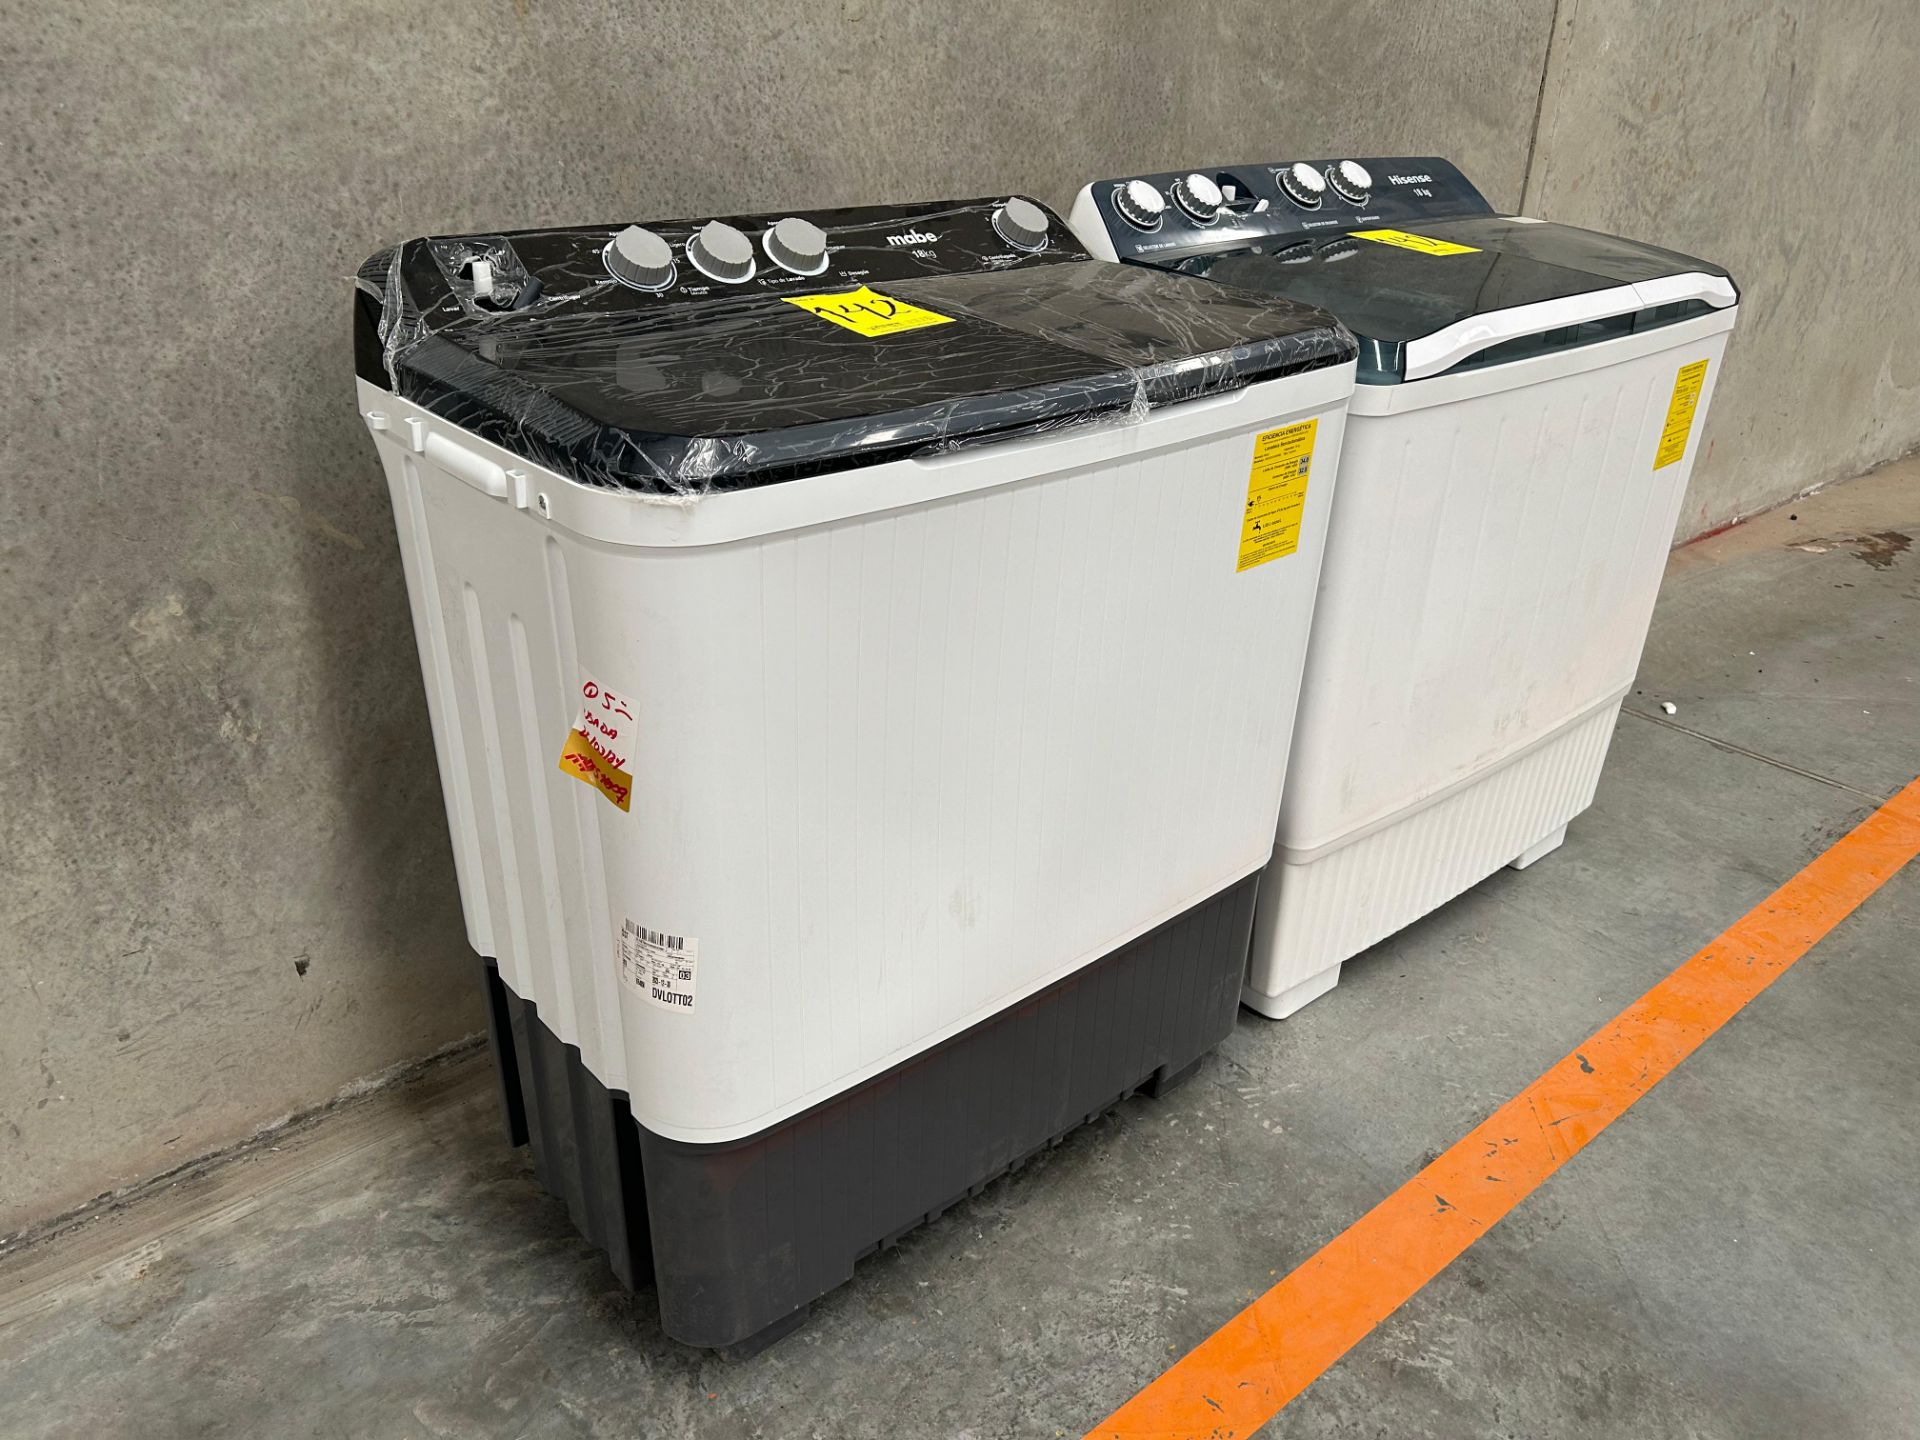 Lote de 2 lavadoras contiene: 1 Lavadora de 18 KG Marca MABE, Modelo LMDX8124HBAB0, Serie S1579, Co - Image 3 of 6